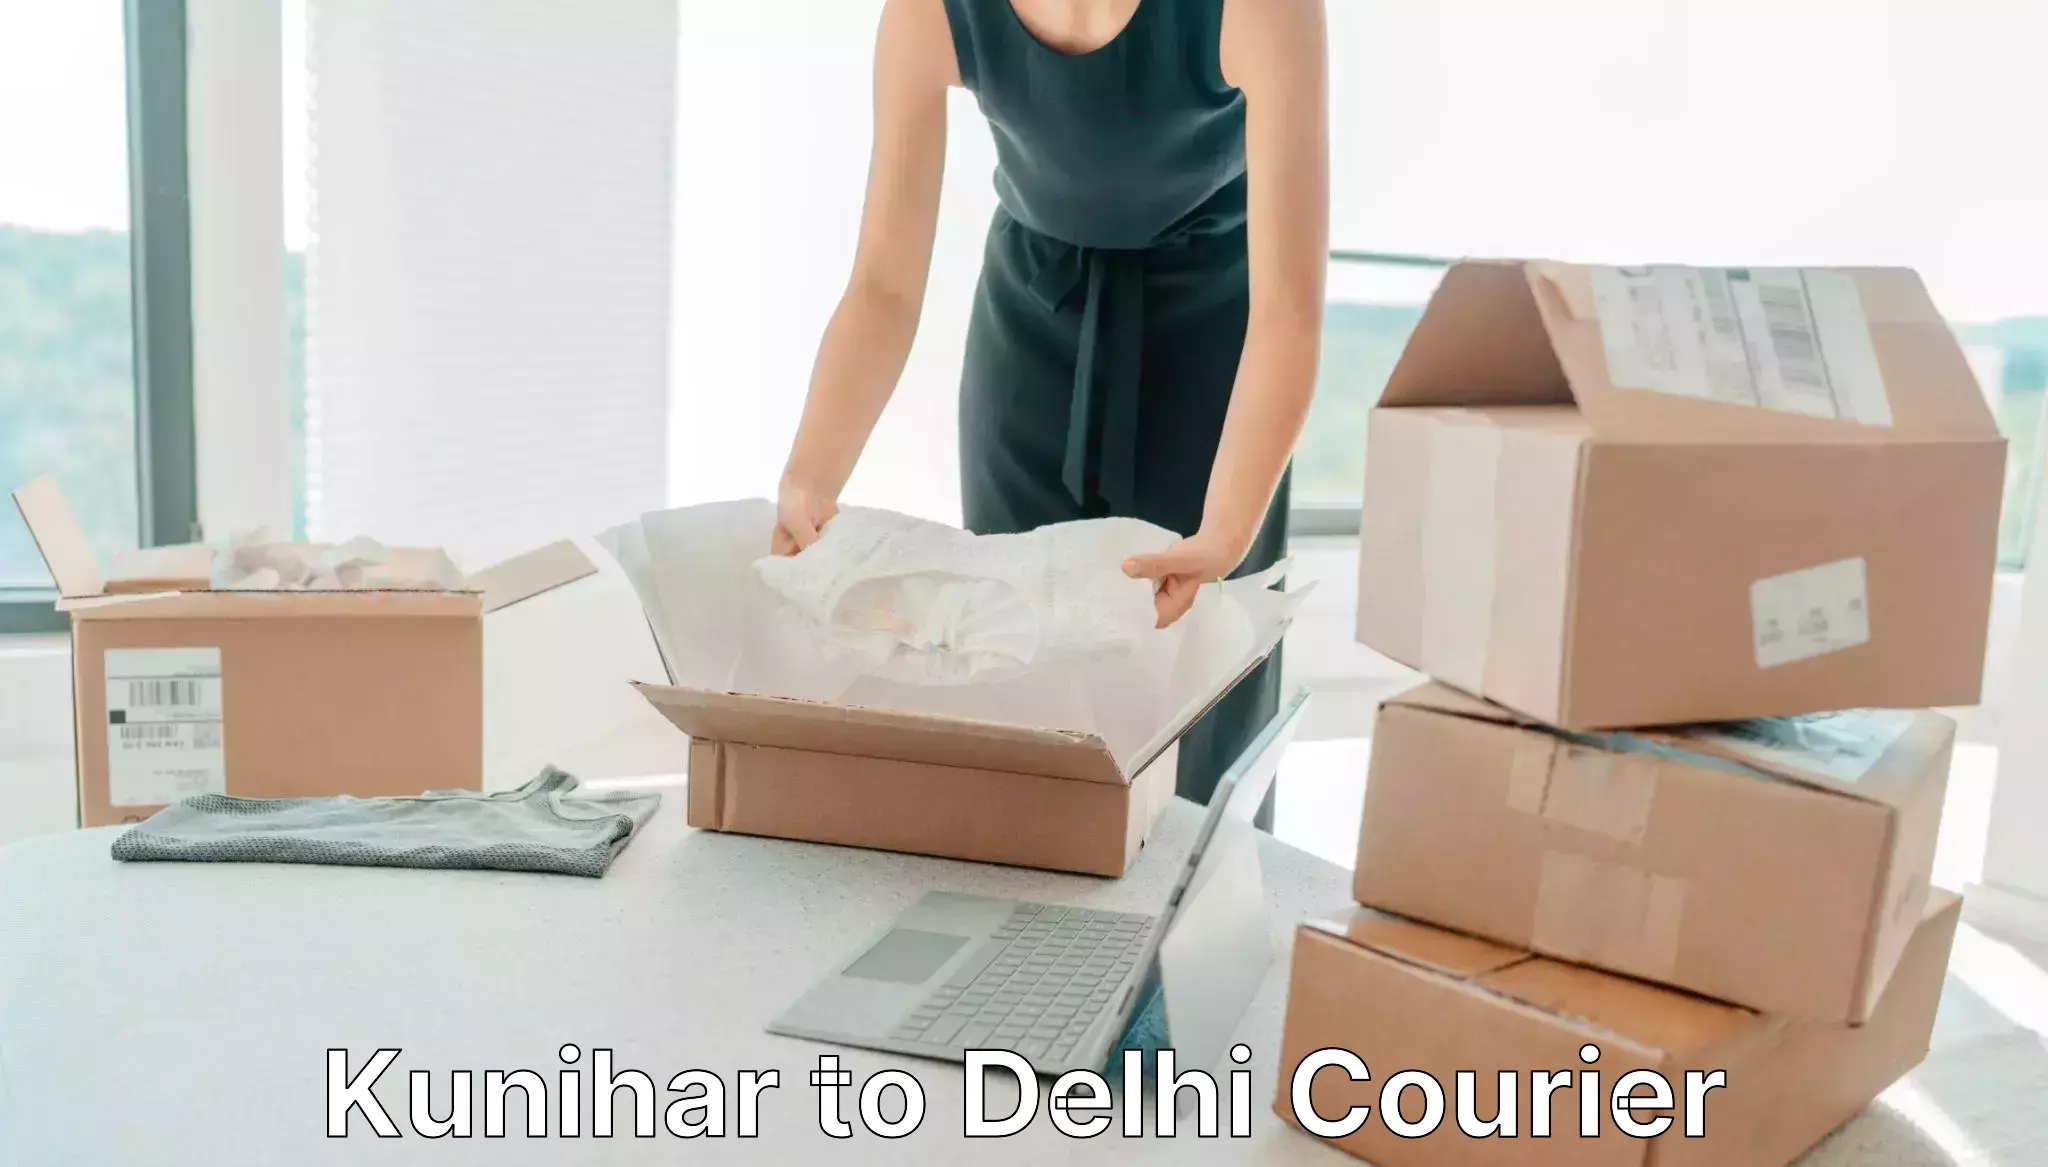 High-priority parcel service Kunihar to Delhi